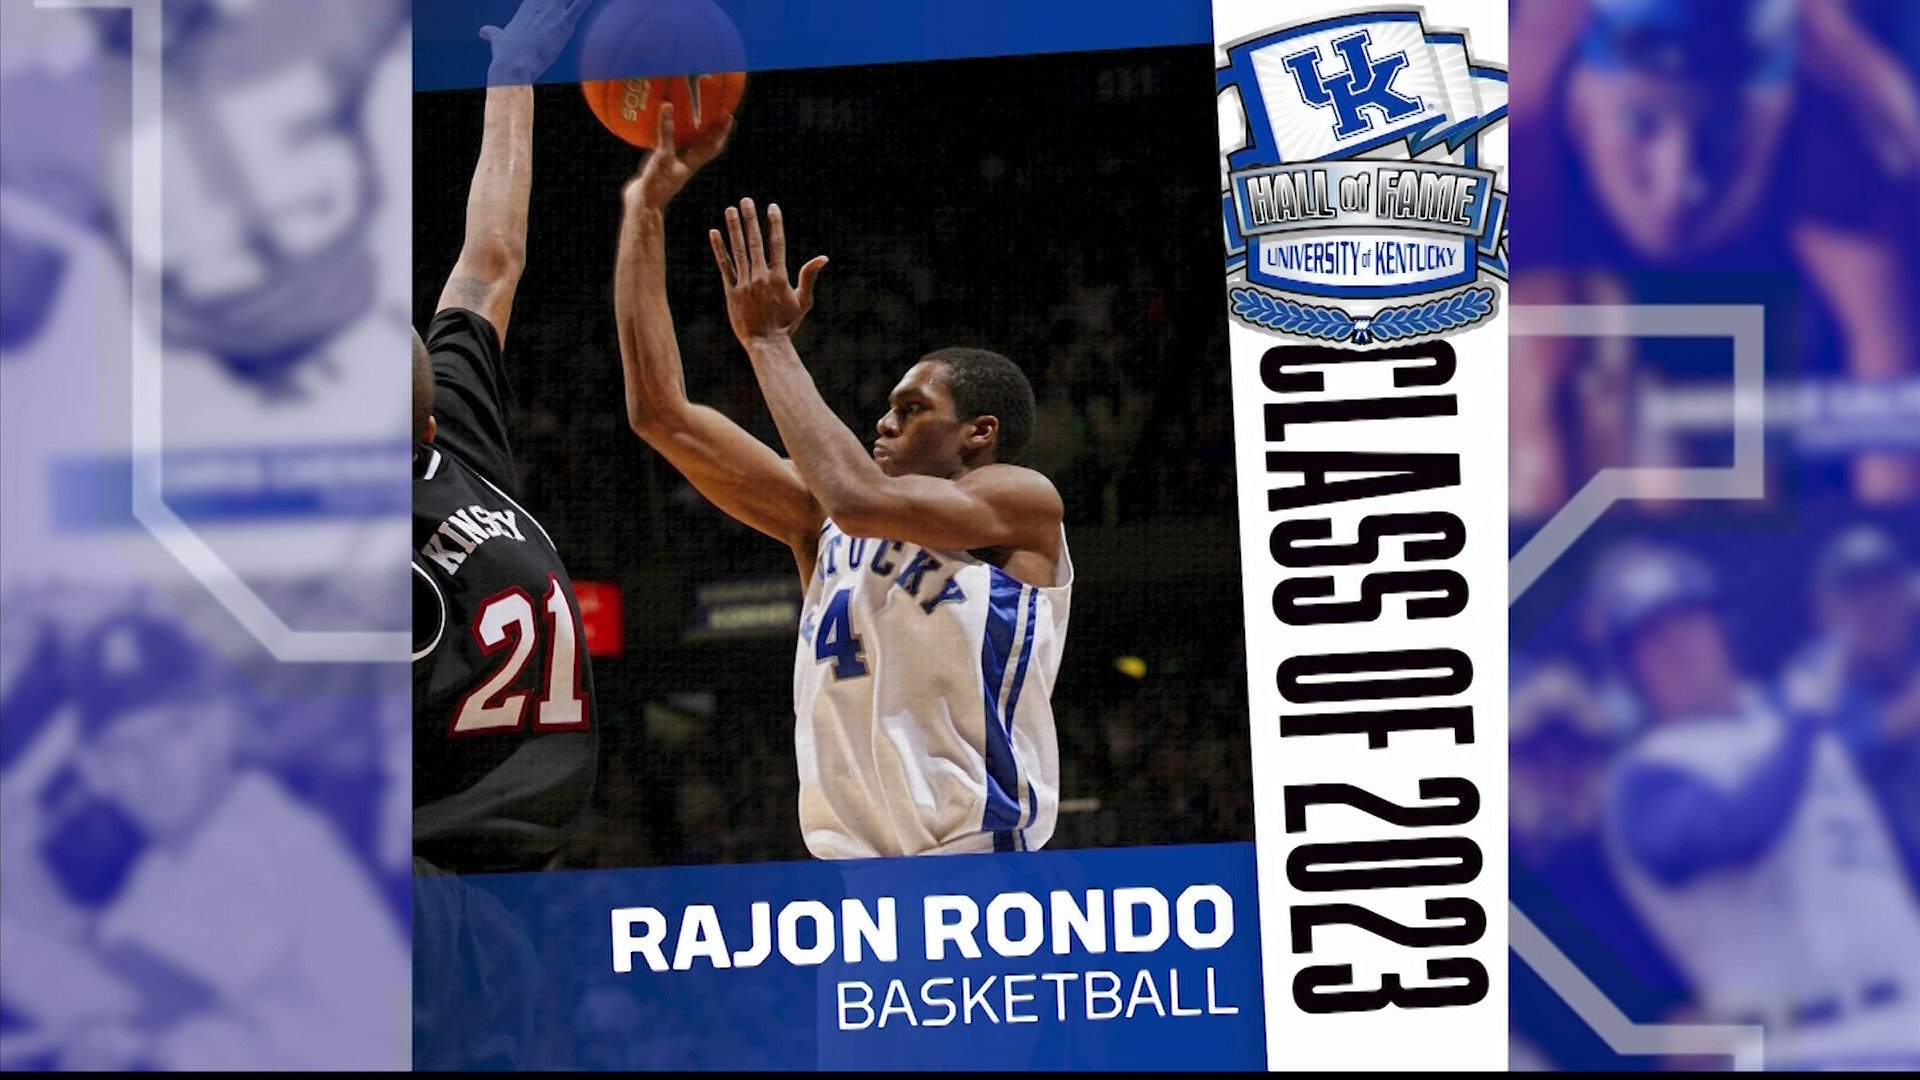 Is Rajon Rondo a Hall of Famer?